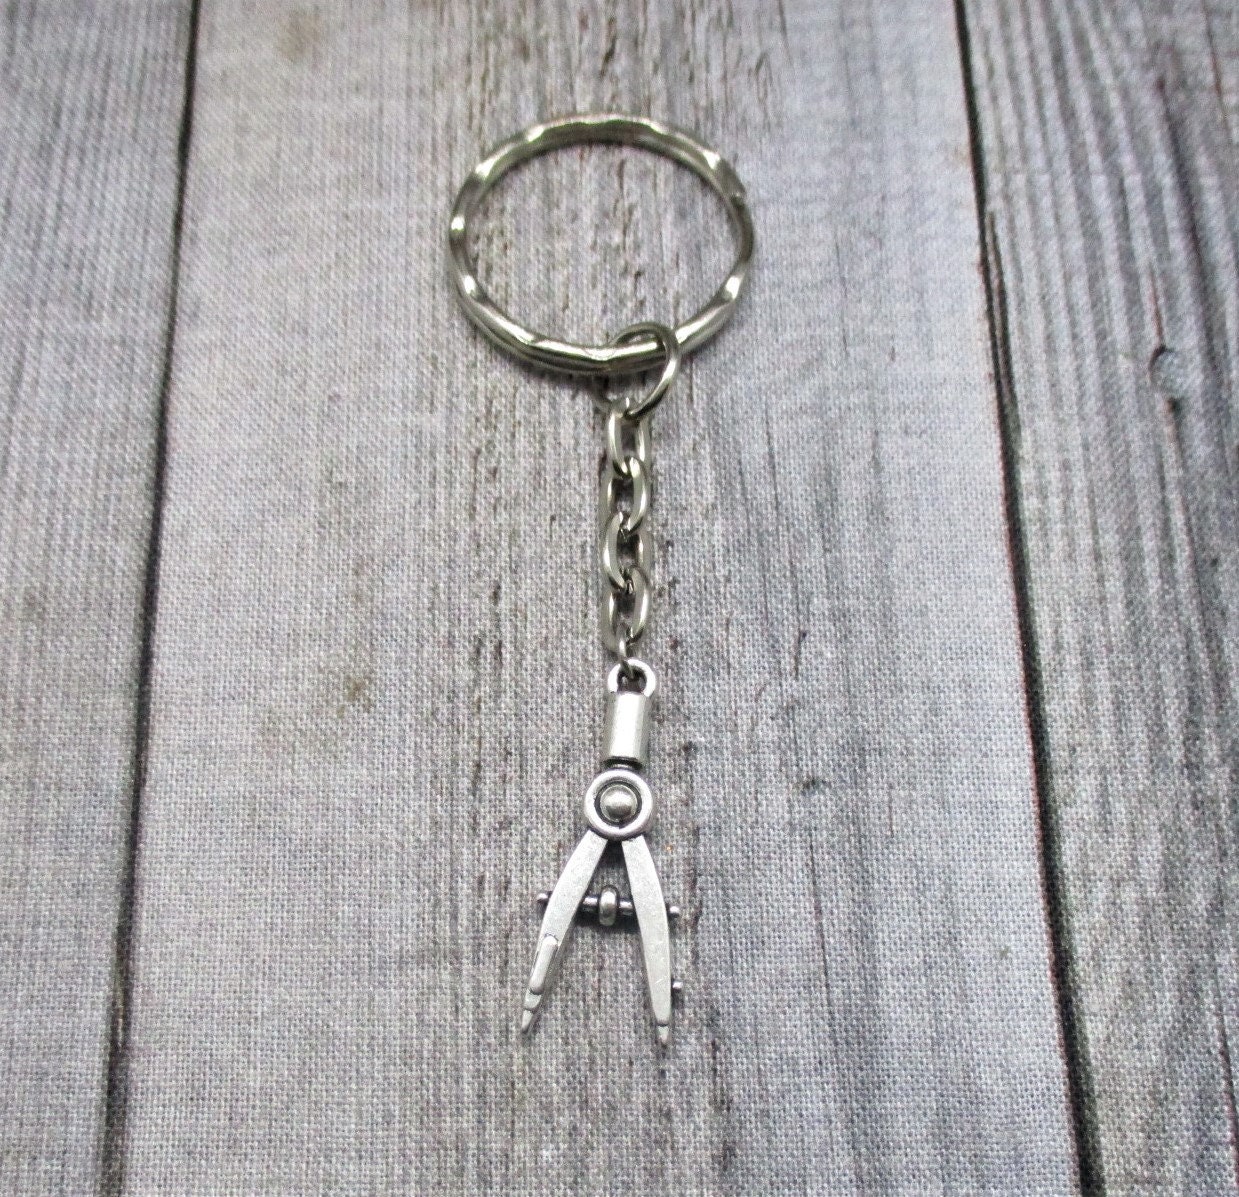 3pcs Mini Key Chain Tool Movable Vernier Caliper Ruler Sliding Key Holder Rings Keychain Tools Cool Keychain Gift Ideas for Men Women